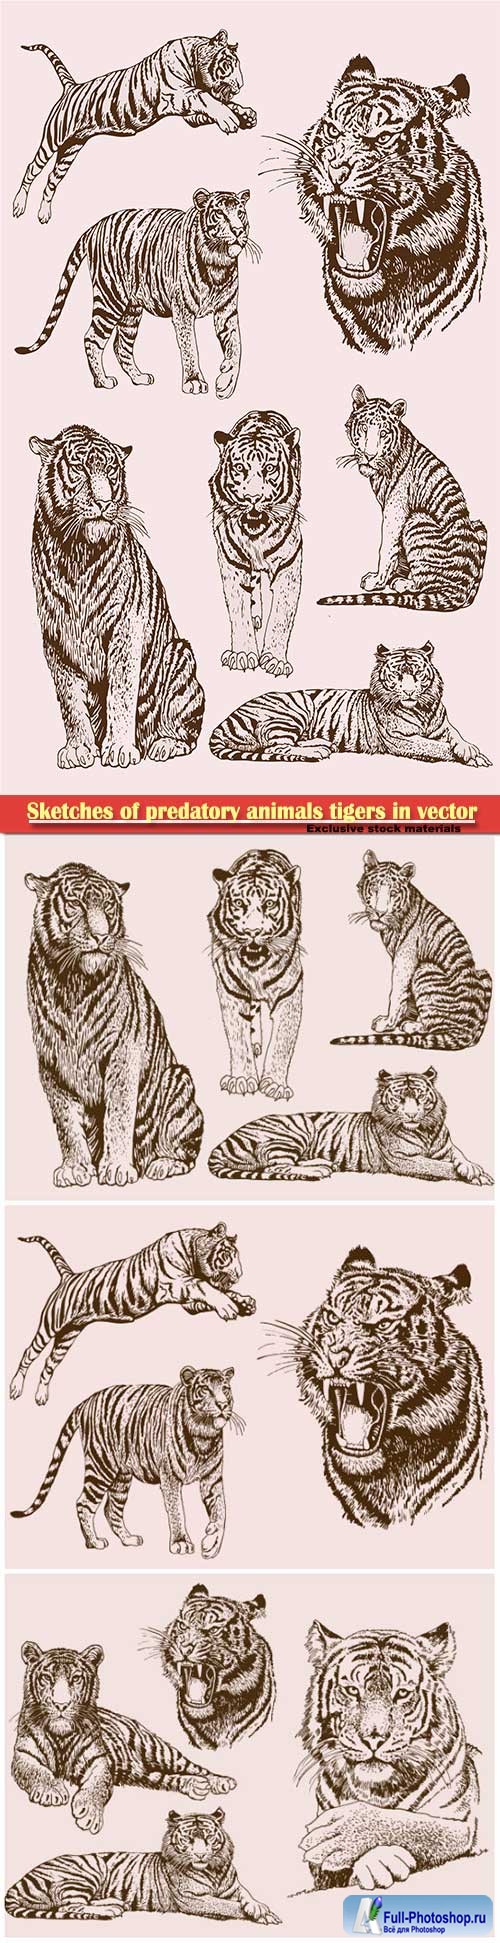 Sketches of predatory animals tigers in vector